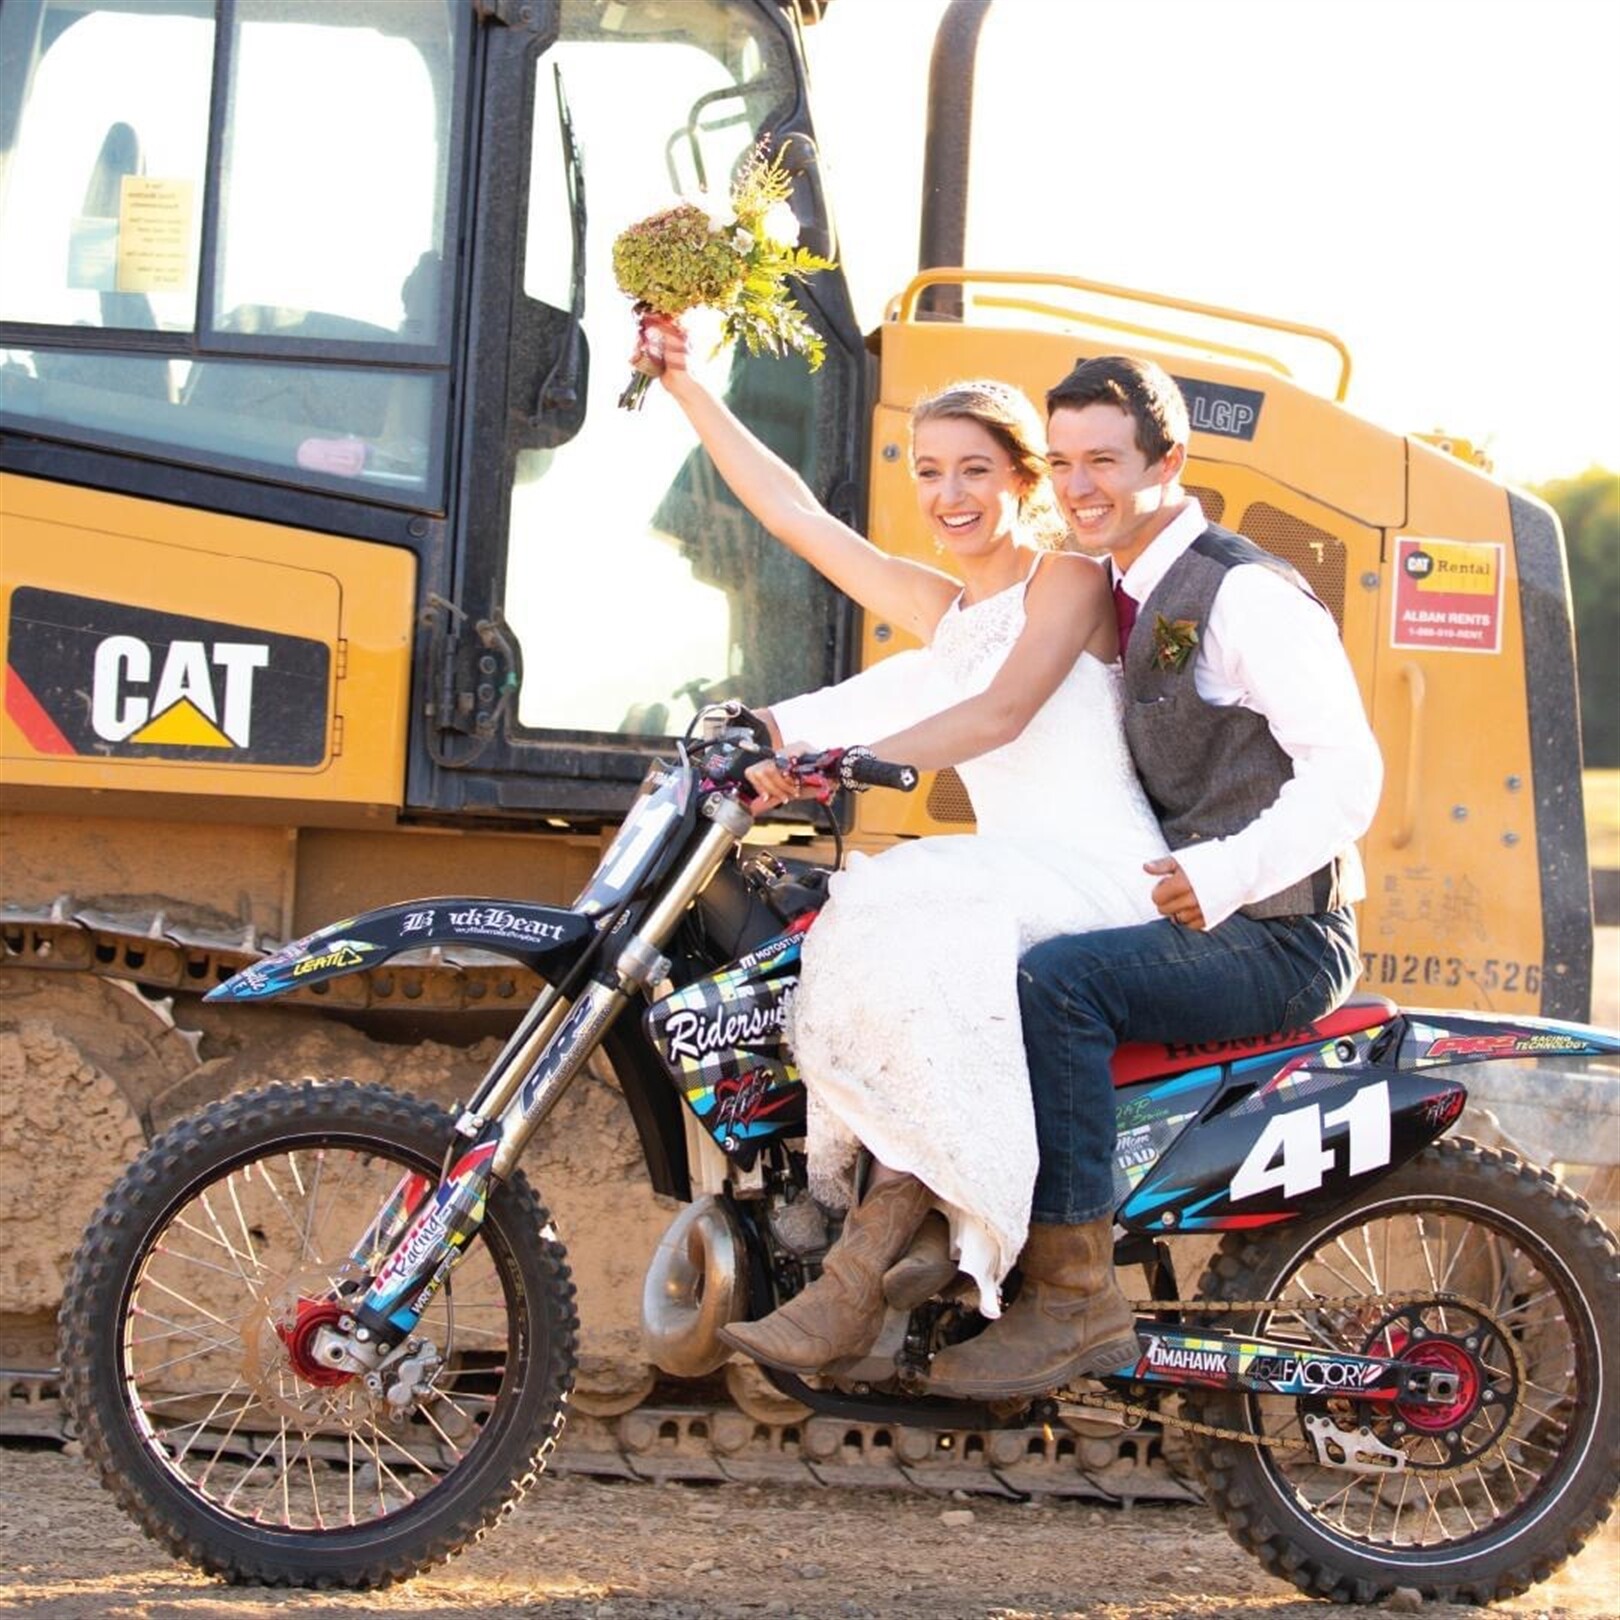 Cat Dozer stars in Wedding Photoshoot